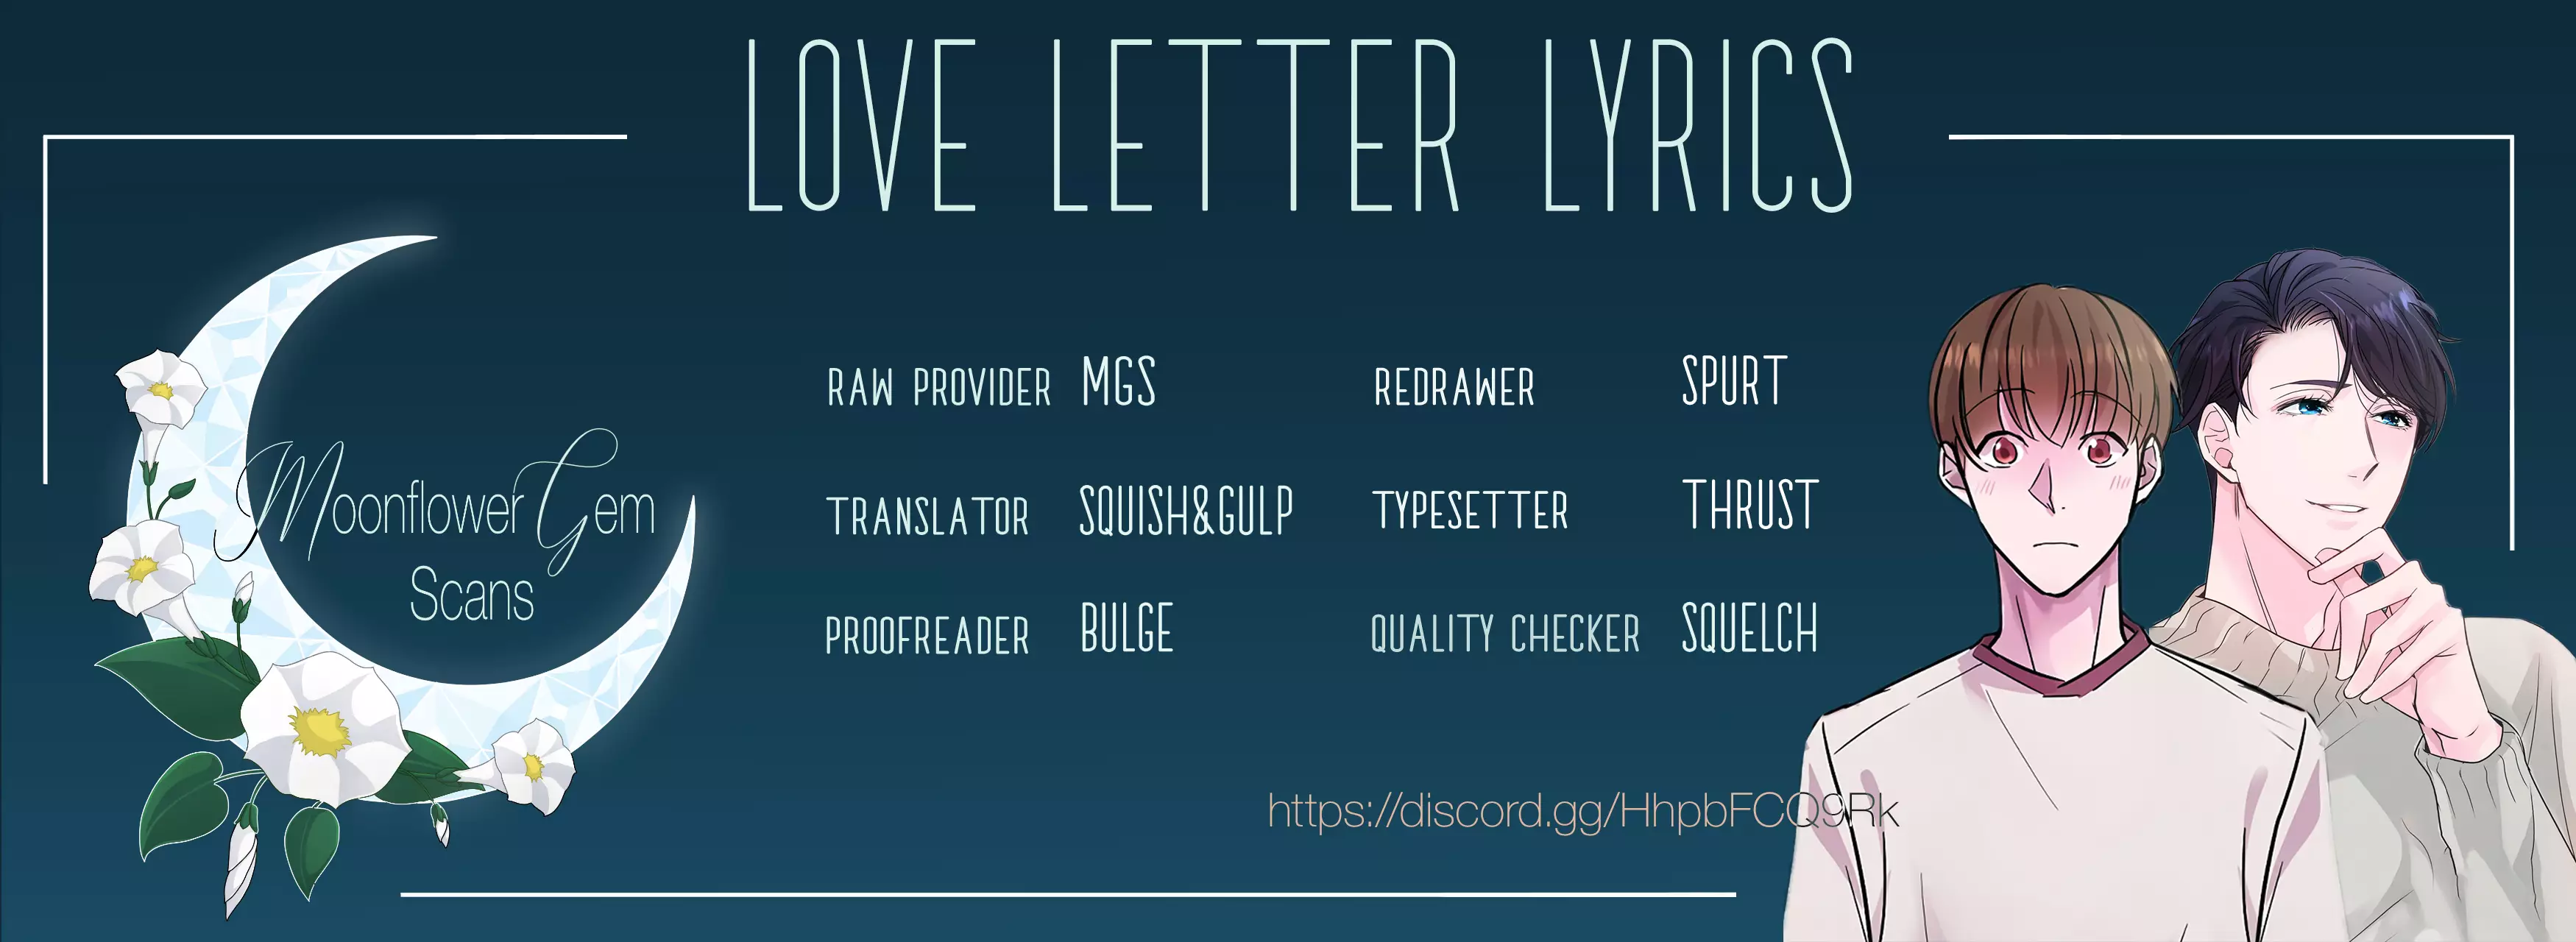 Love Letter Lyrics - 1 page 1-94096c01